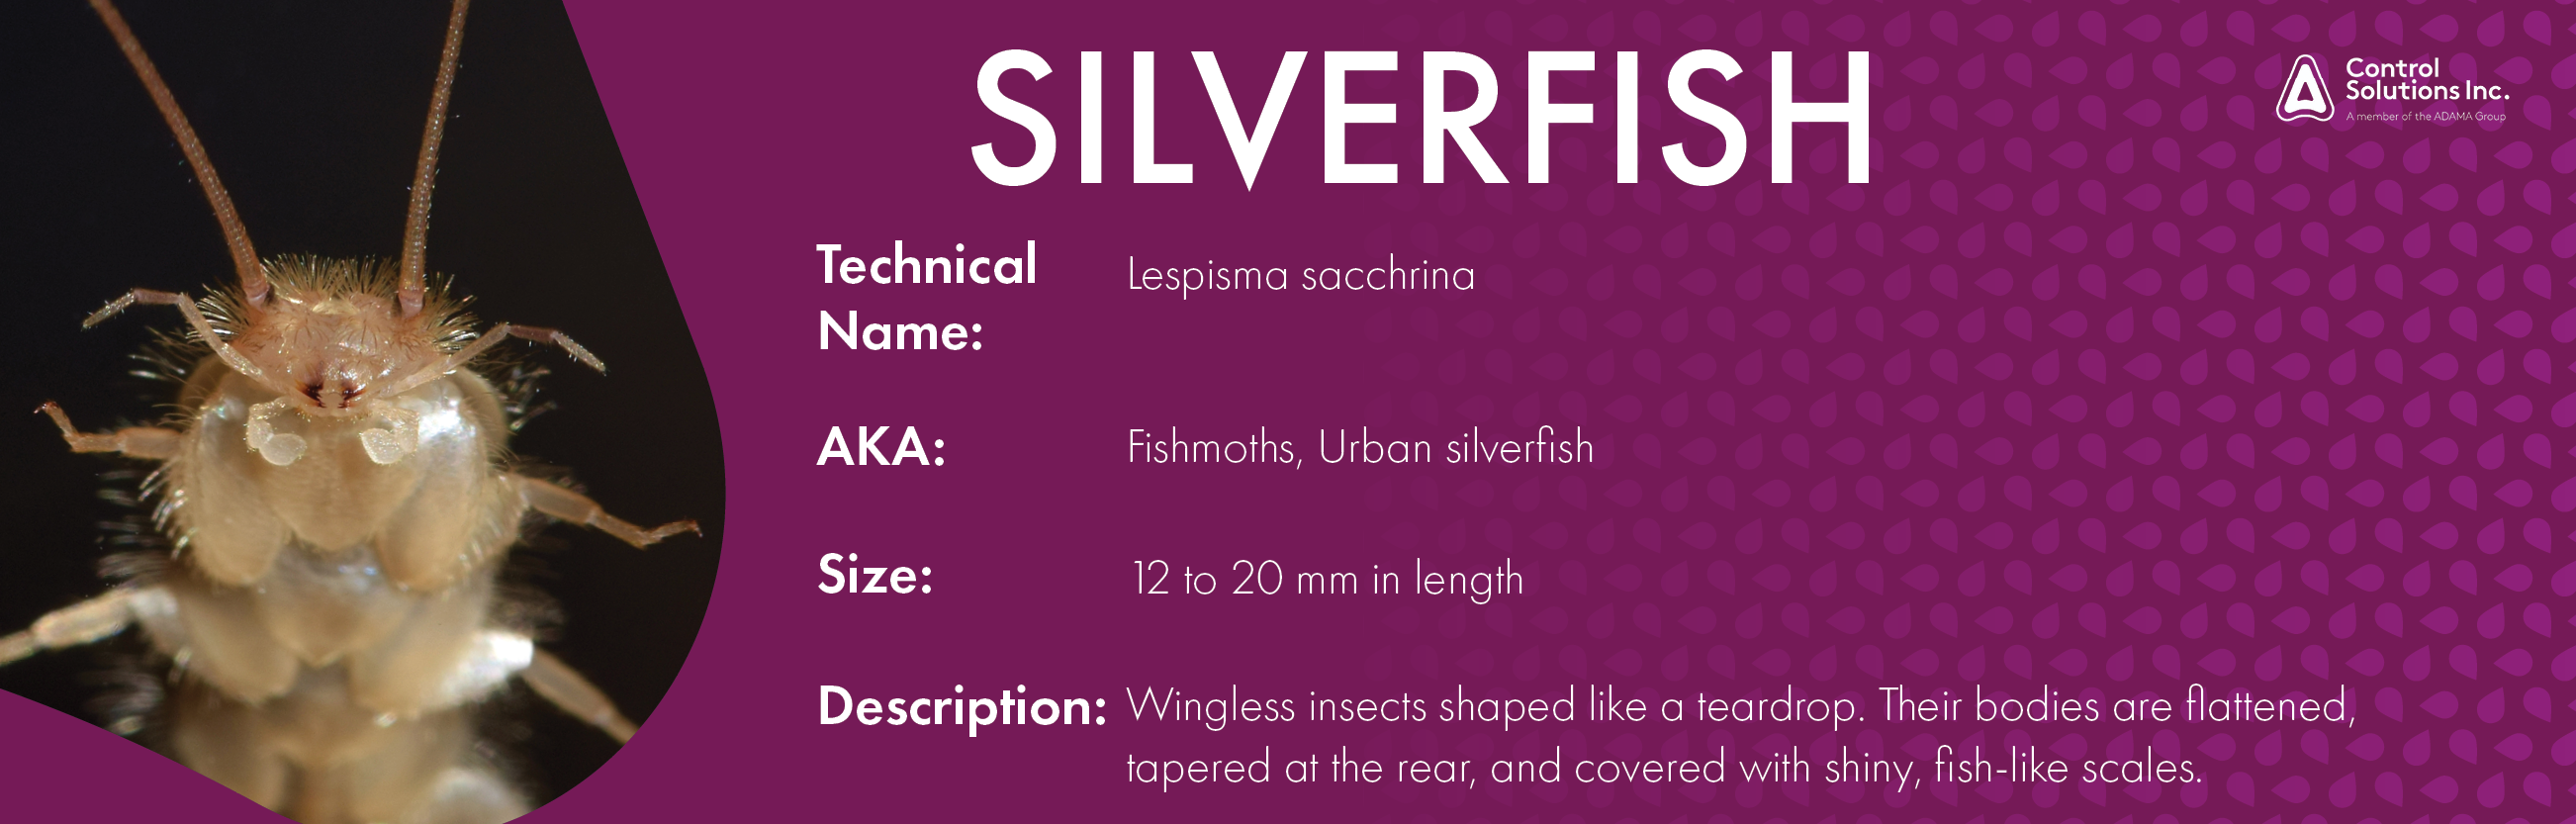 silverfish.info_graphic200x625